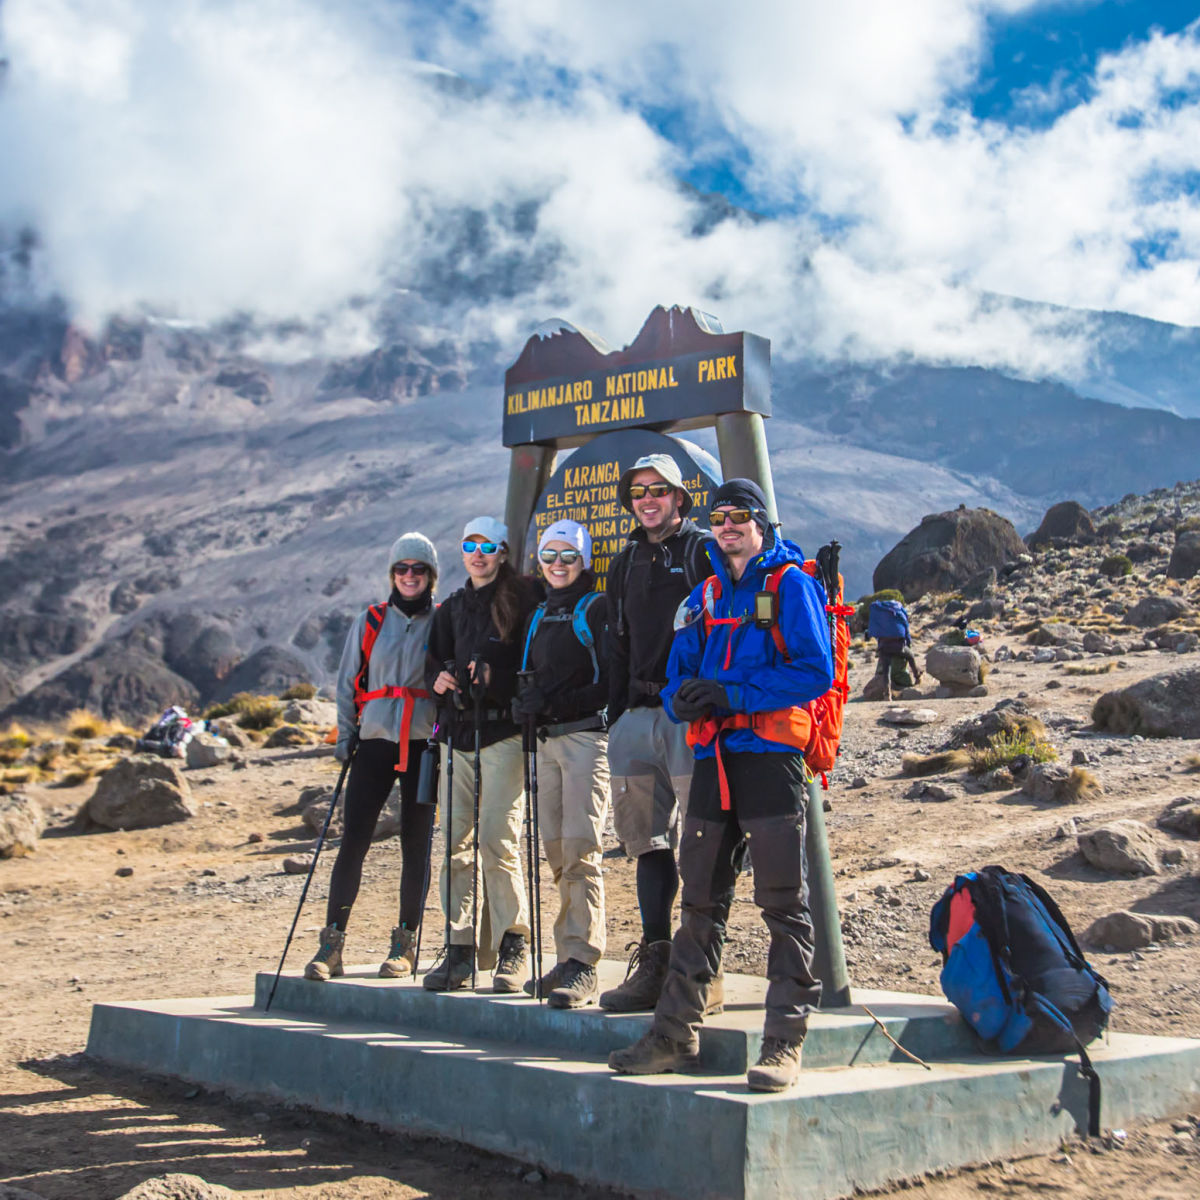 Smiling group of trekkers in front of Karanga Camp sign on Kilimanjaro